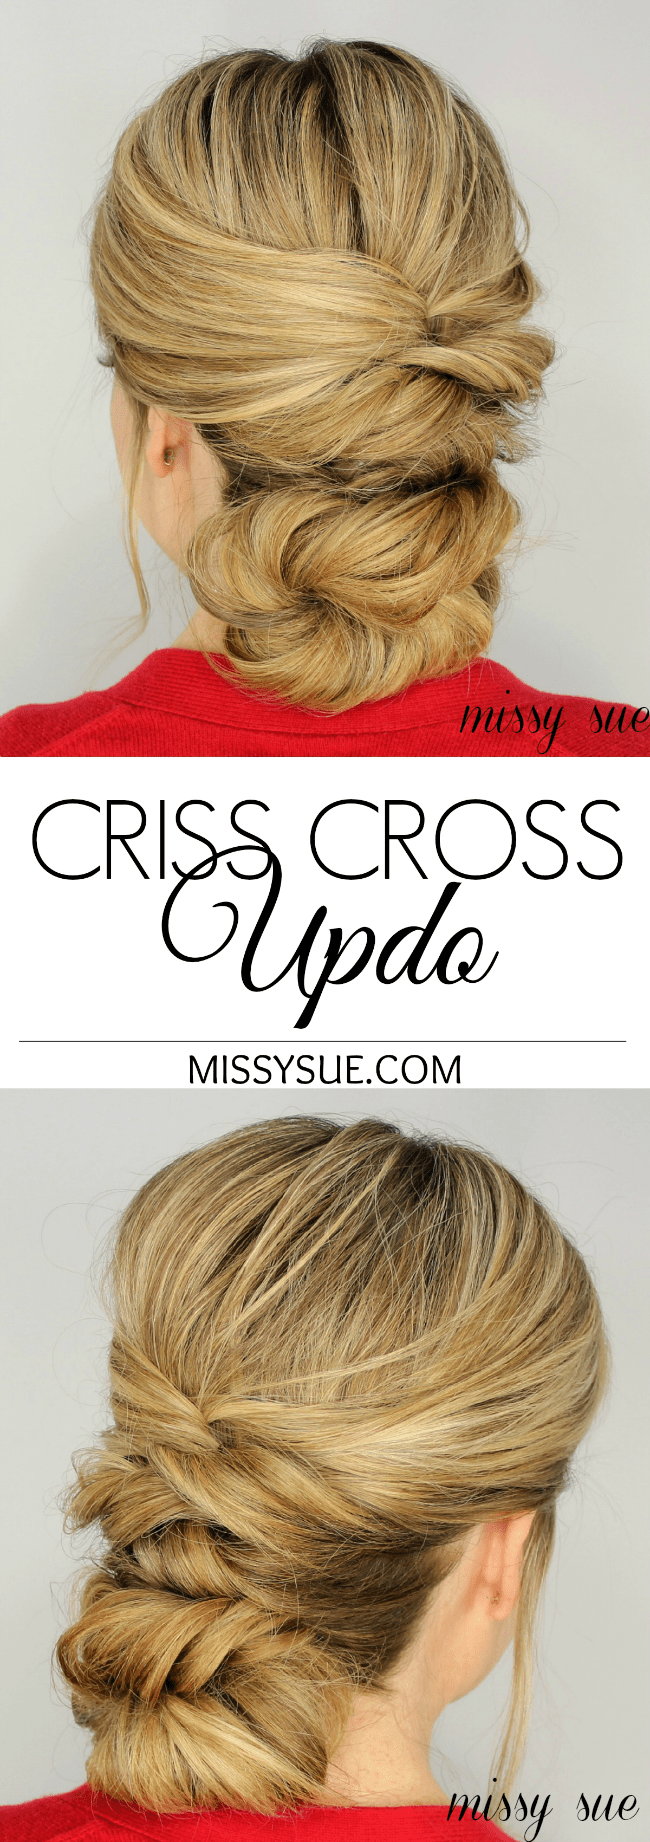 Criss Cross Updo | MissySue.com